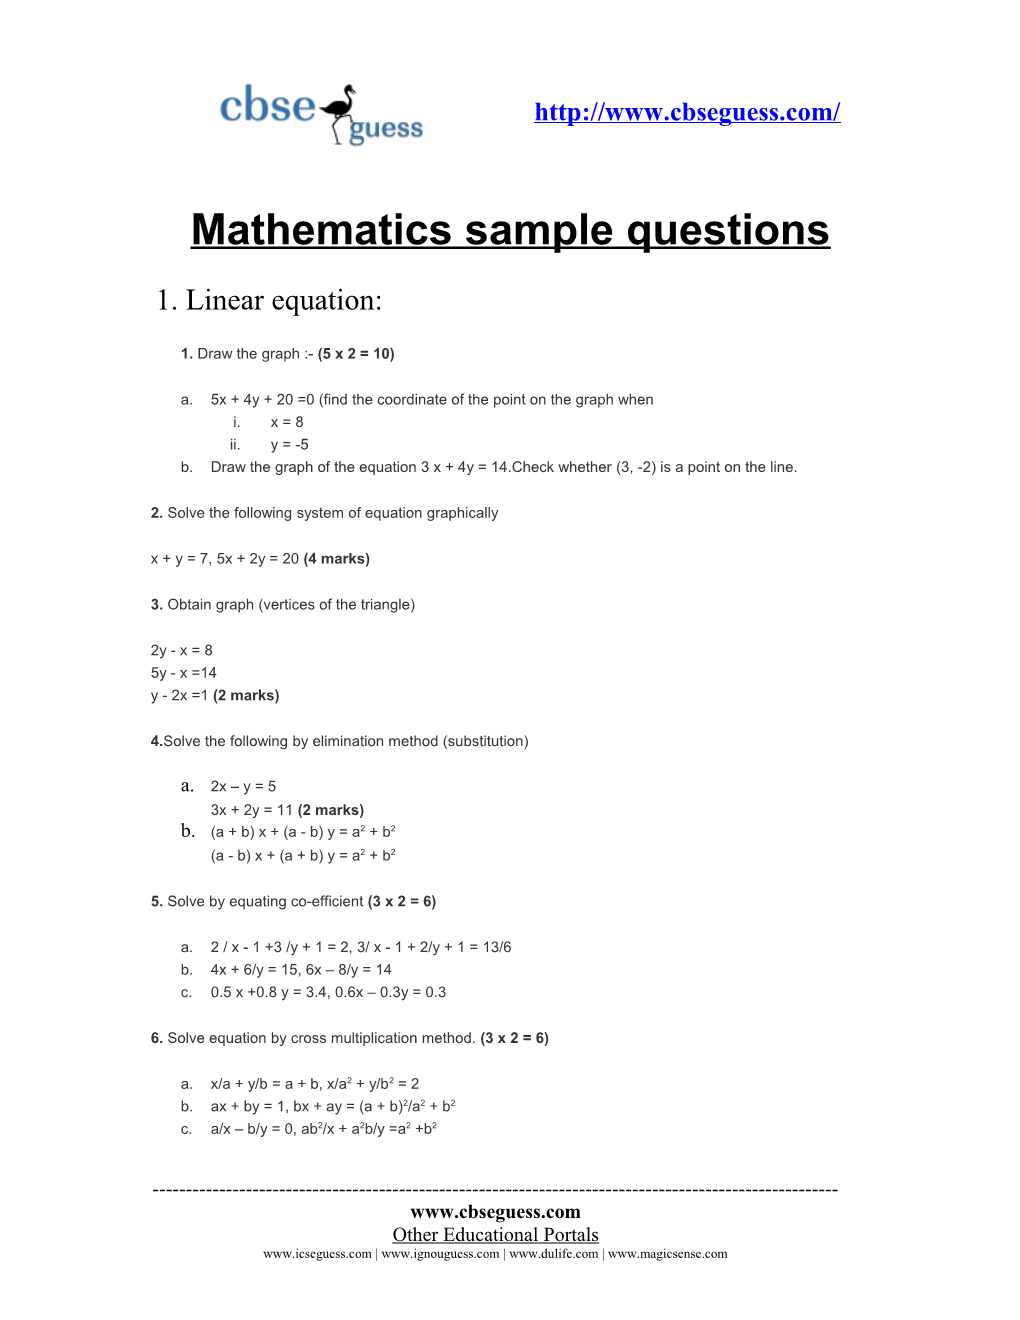 Mathematics Sample Questions